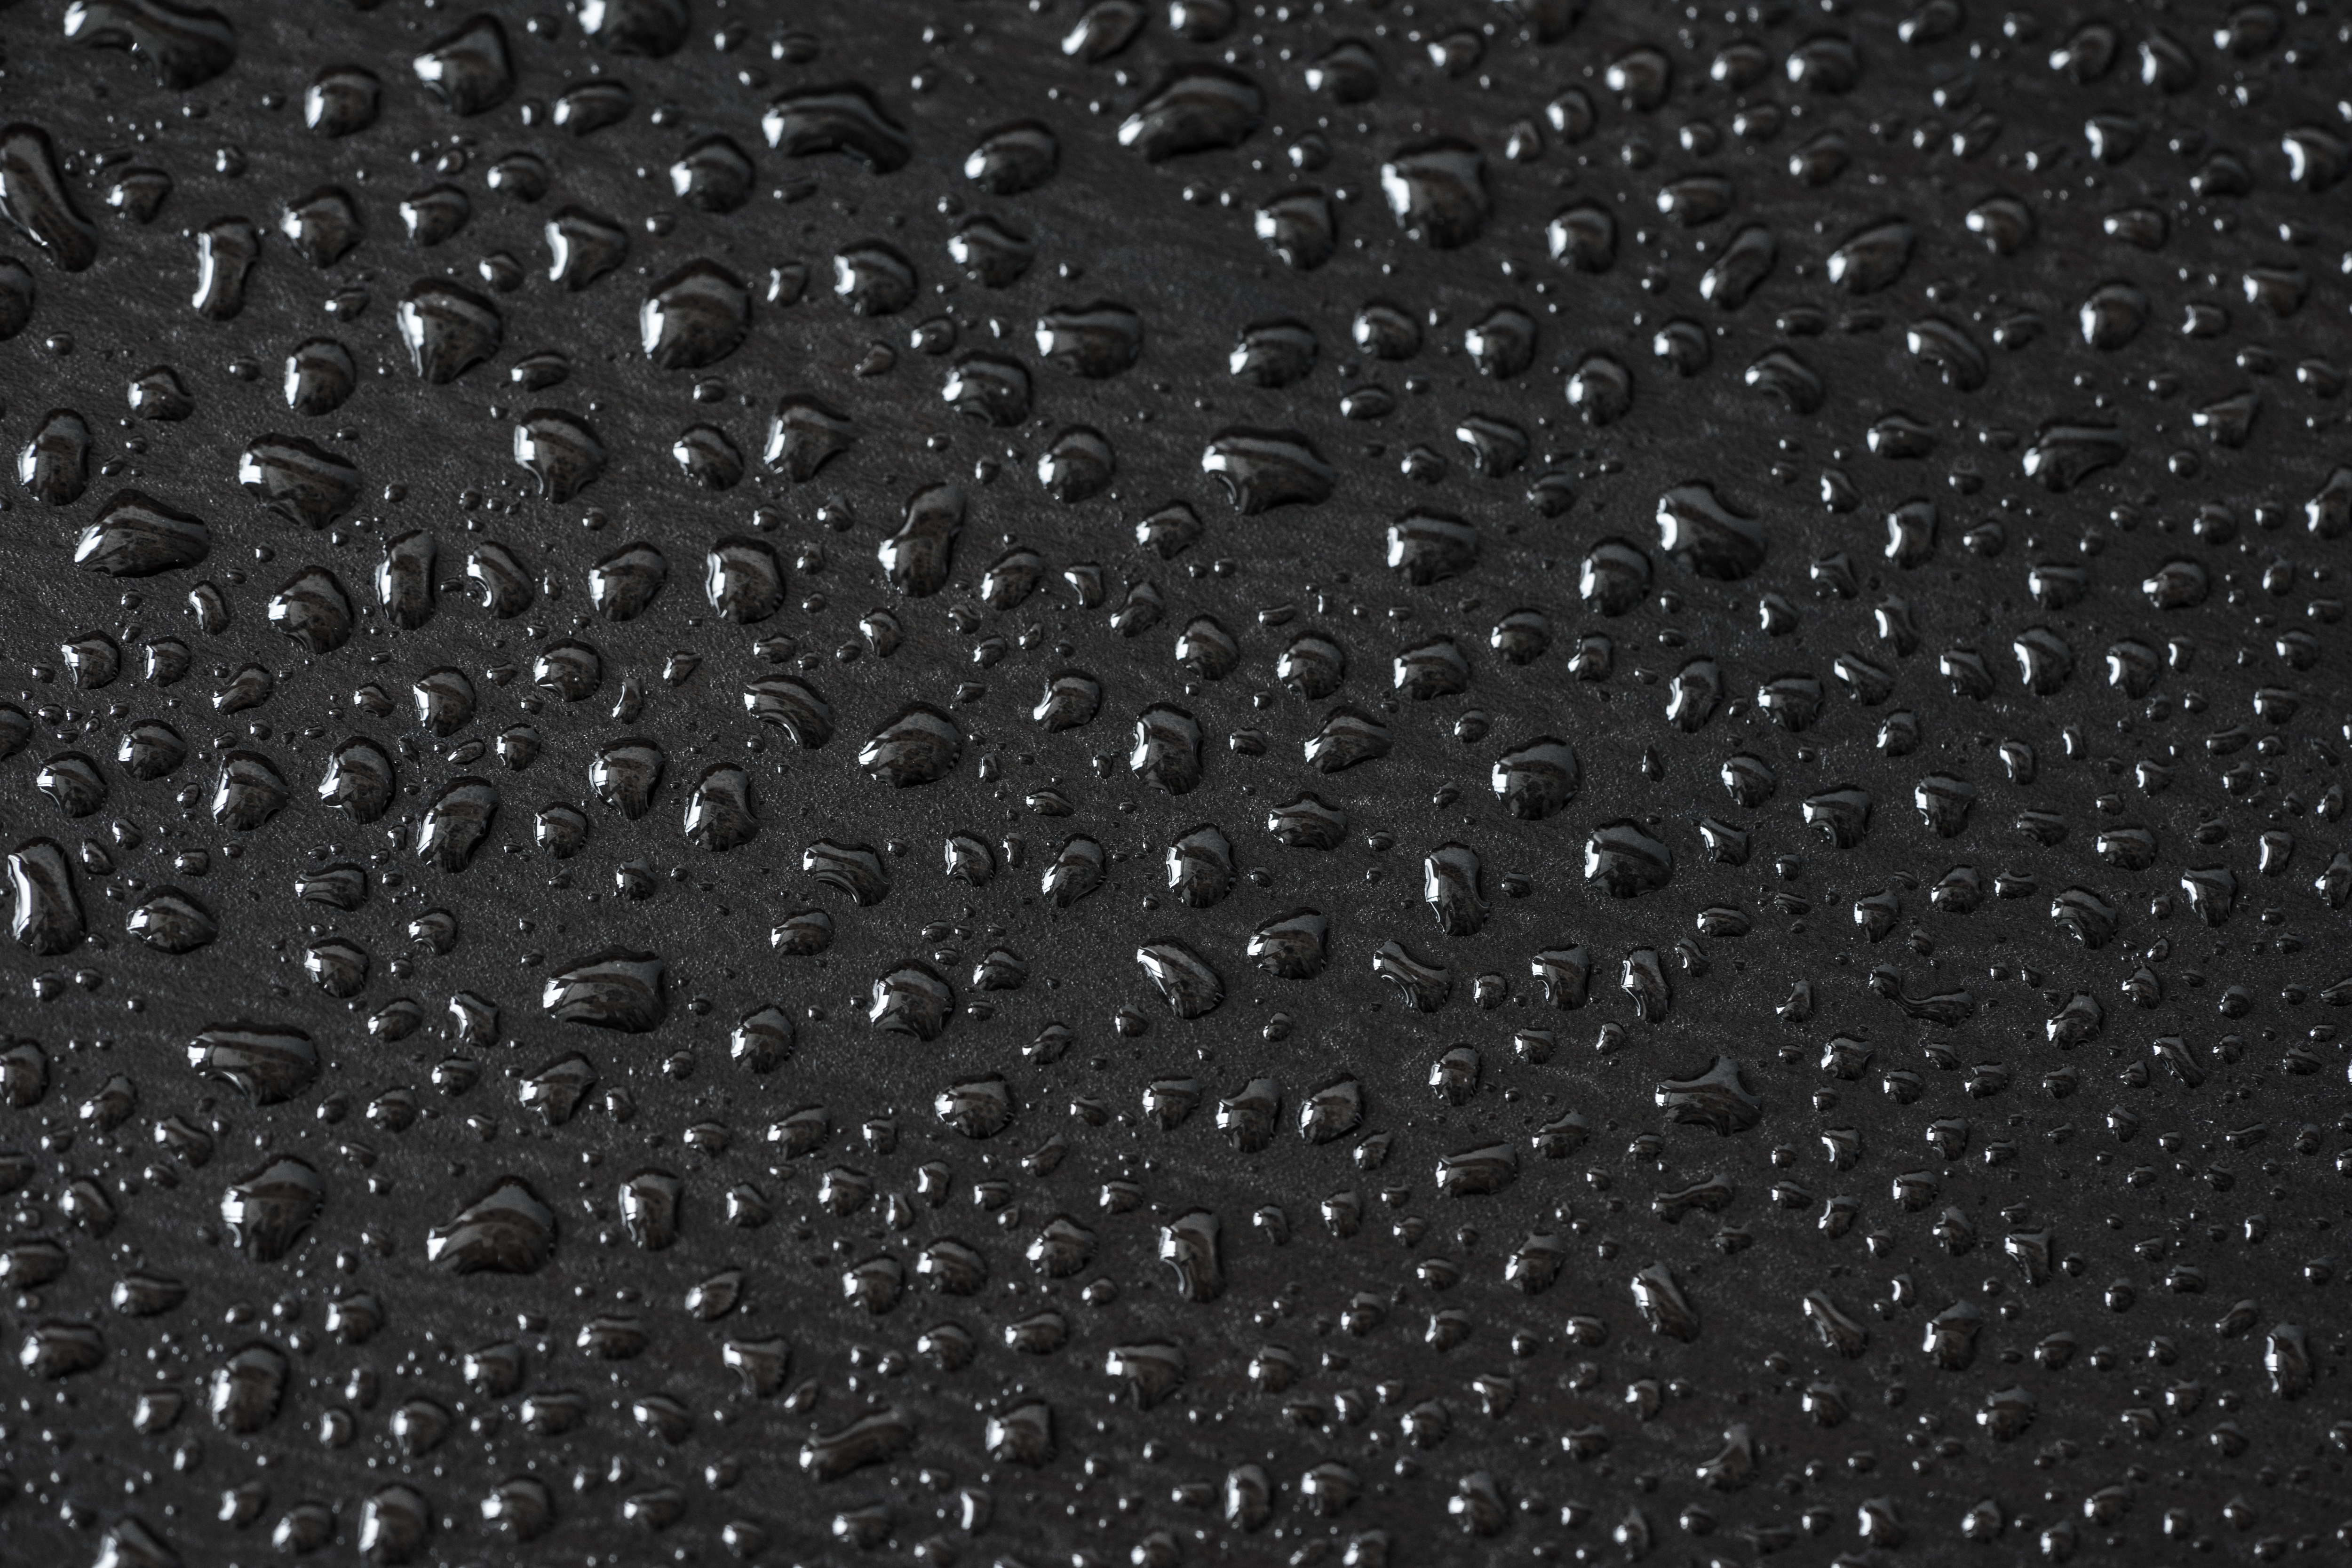 Black Water Drops Abstract Background Pattern Free Stock Photo | picjumbo